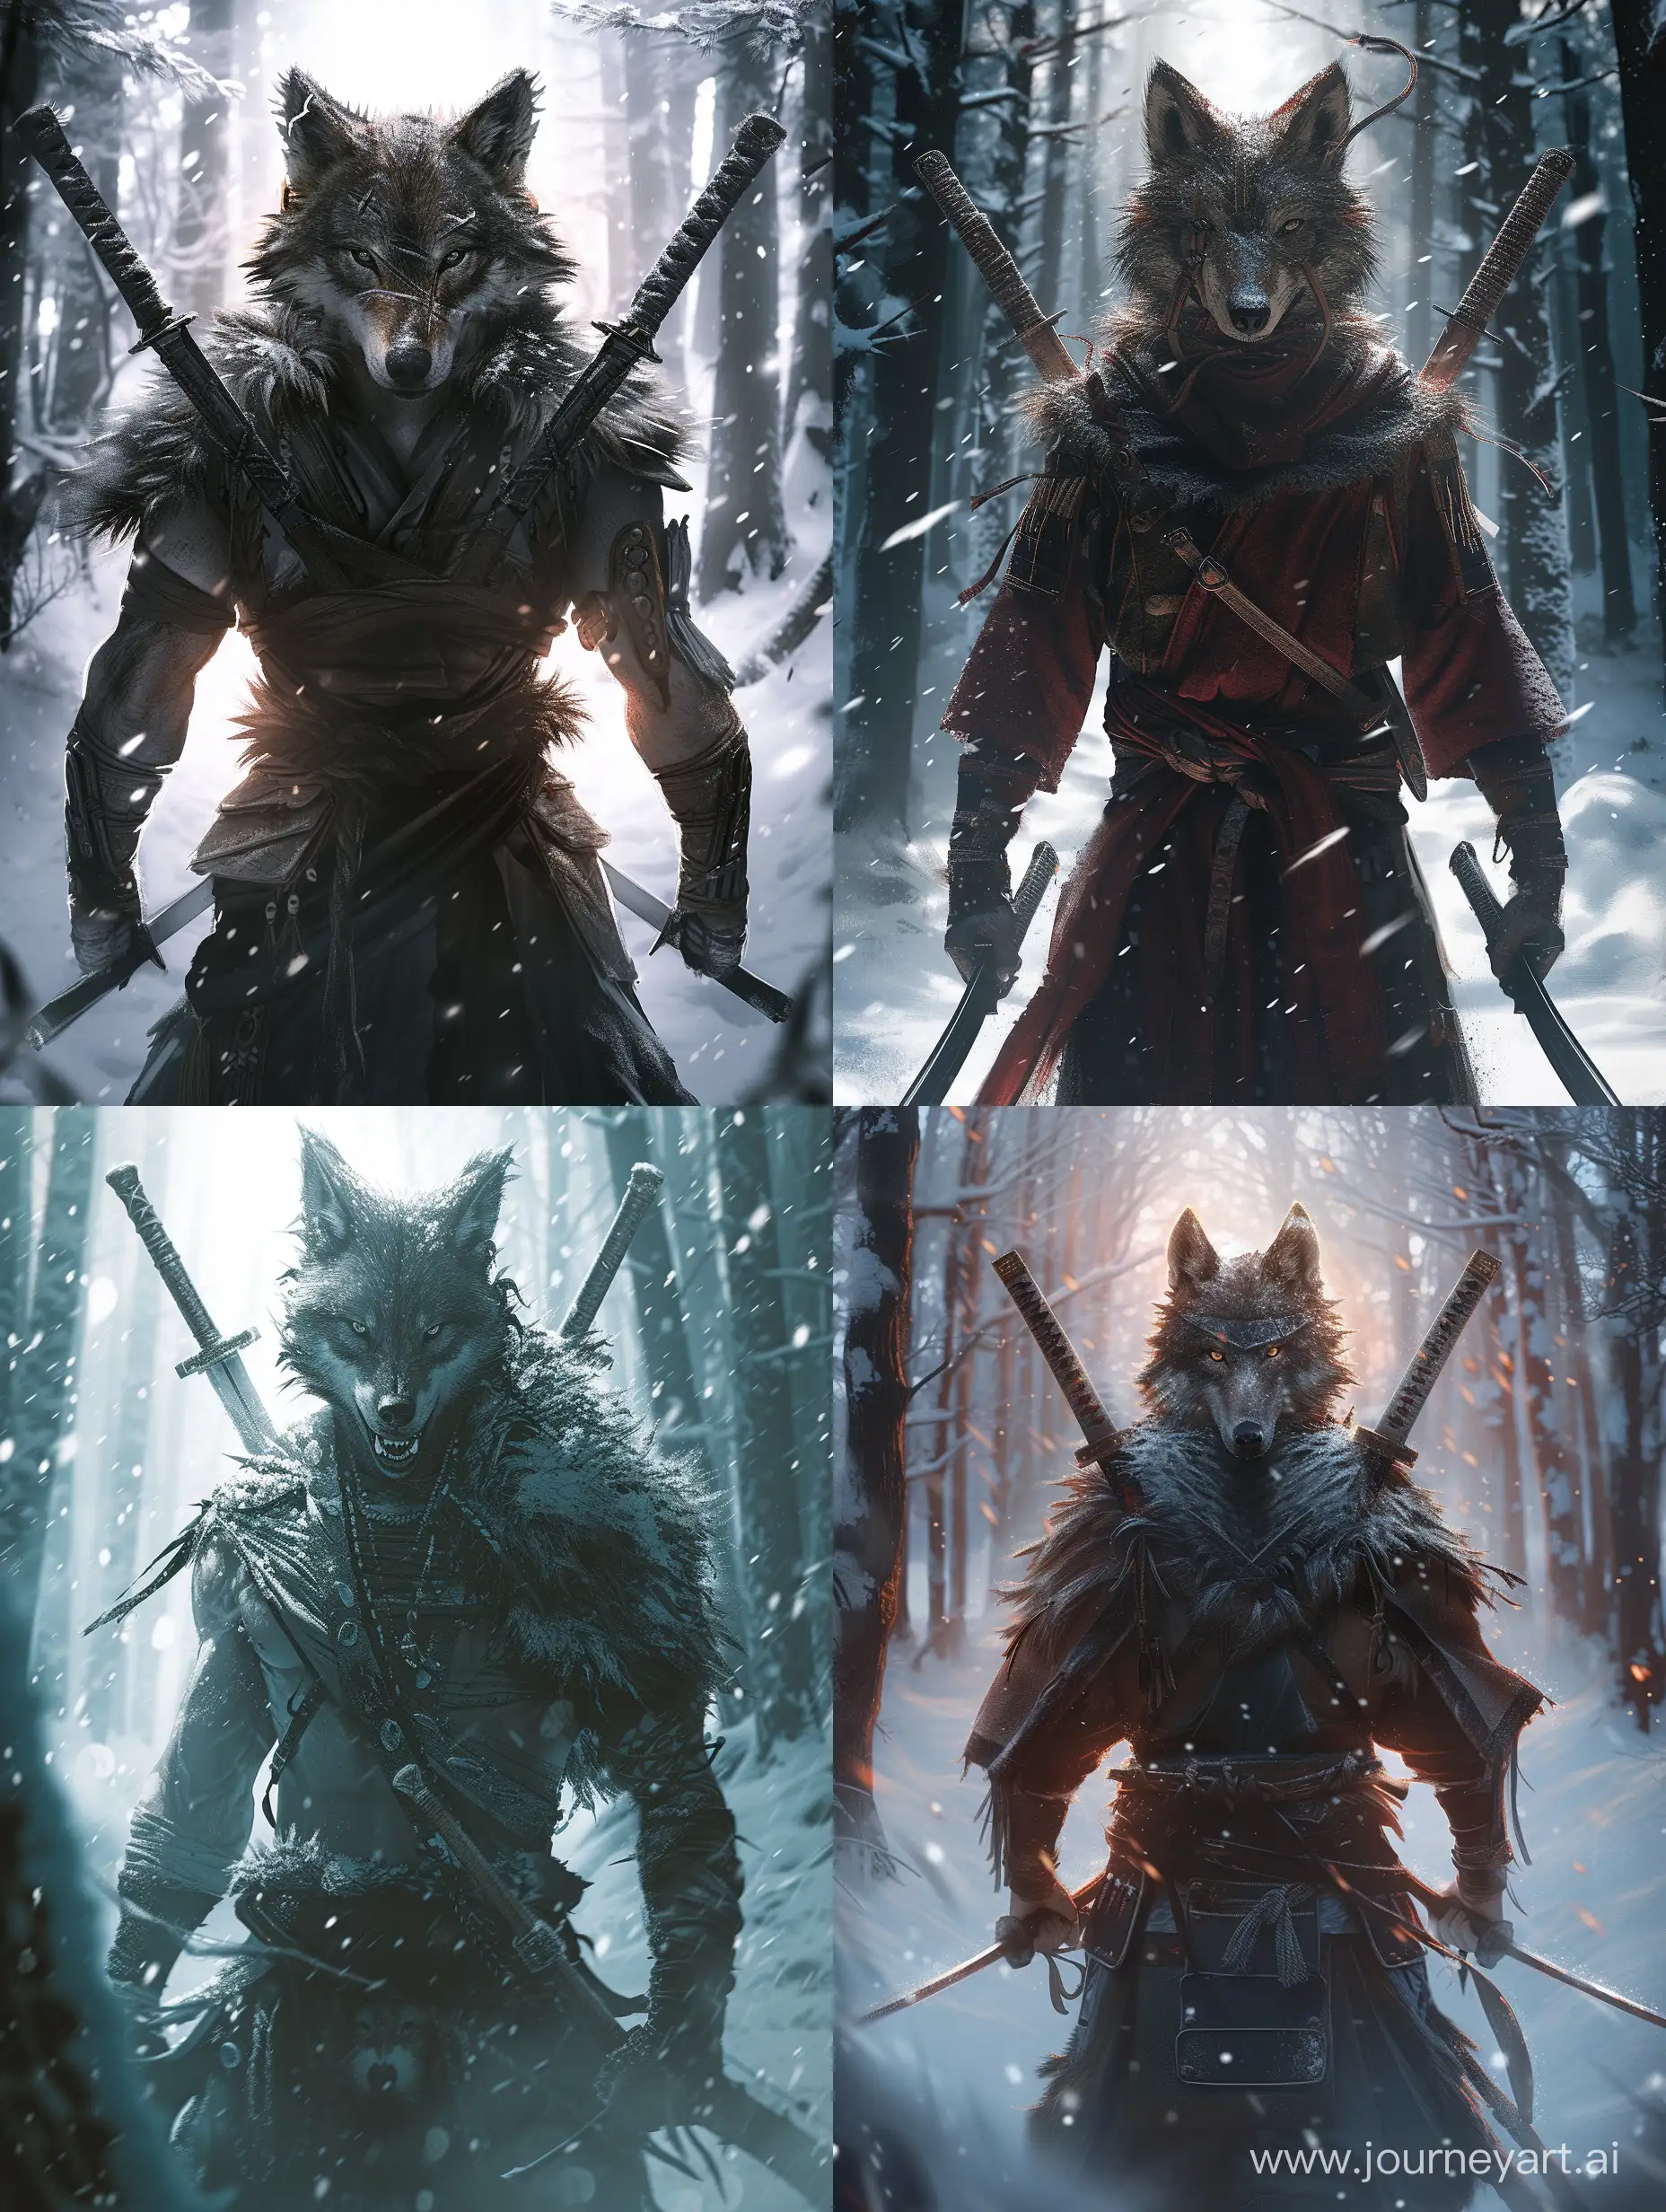 Ferocious-WolfHeaded-Warrior-in-Snowy-Forest-with-Dual-Swords-Digital-Art